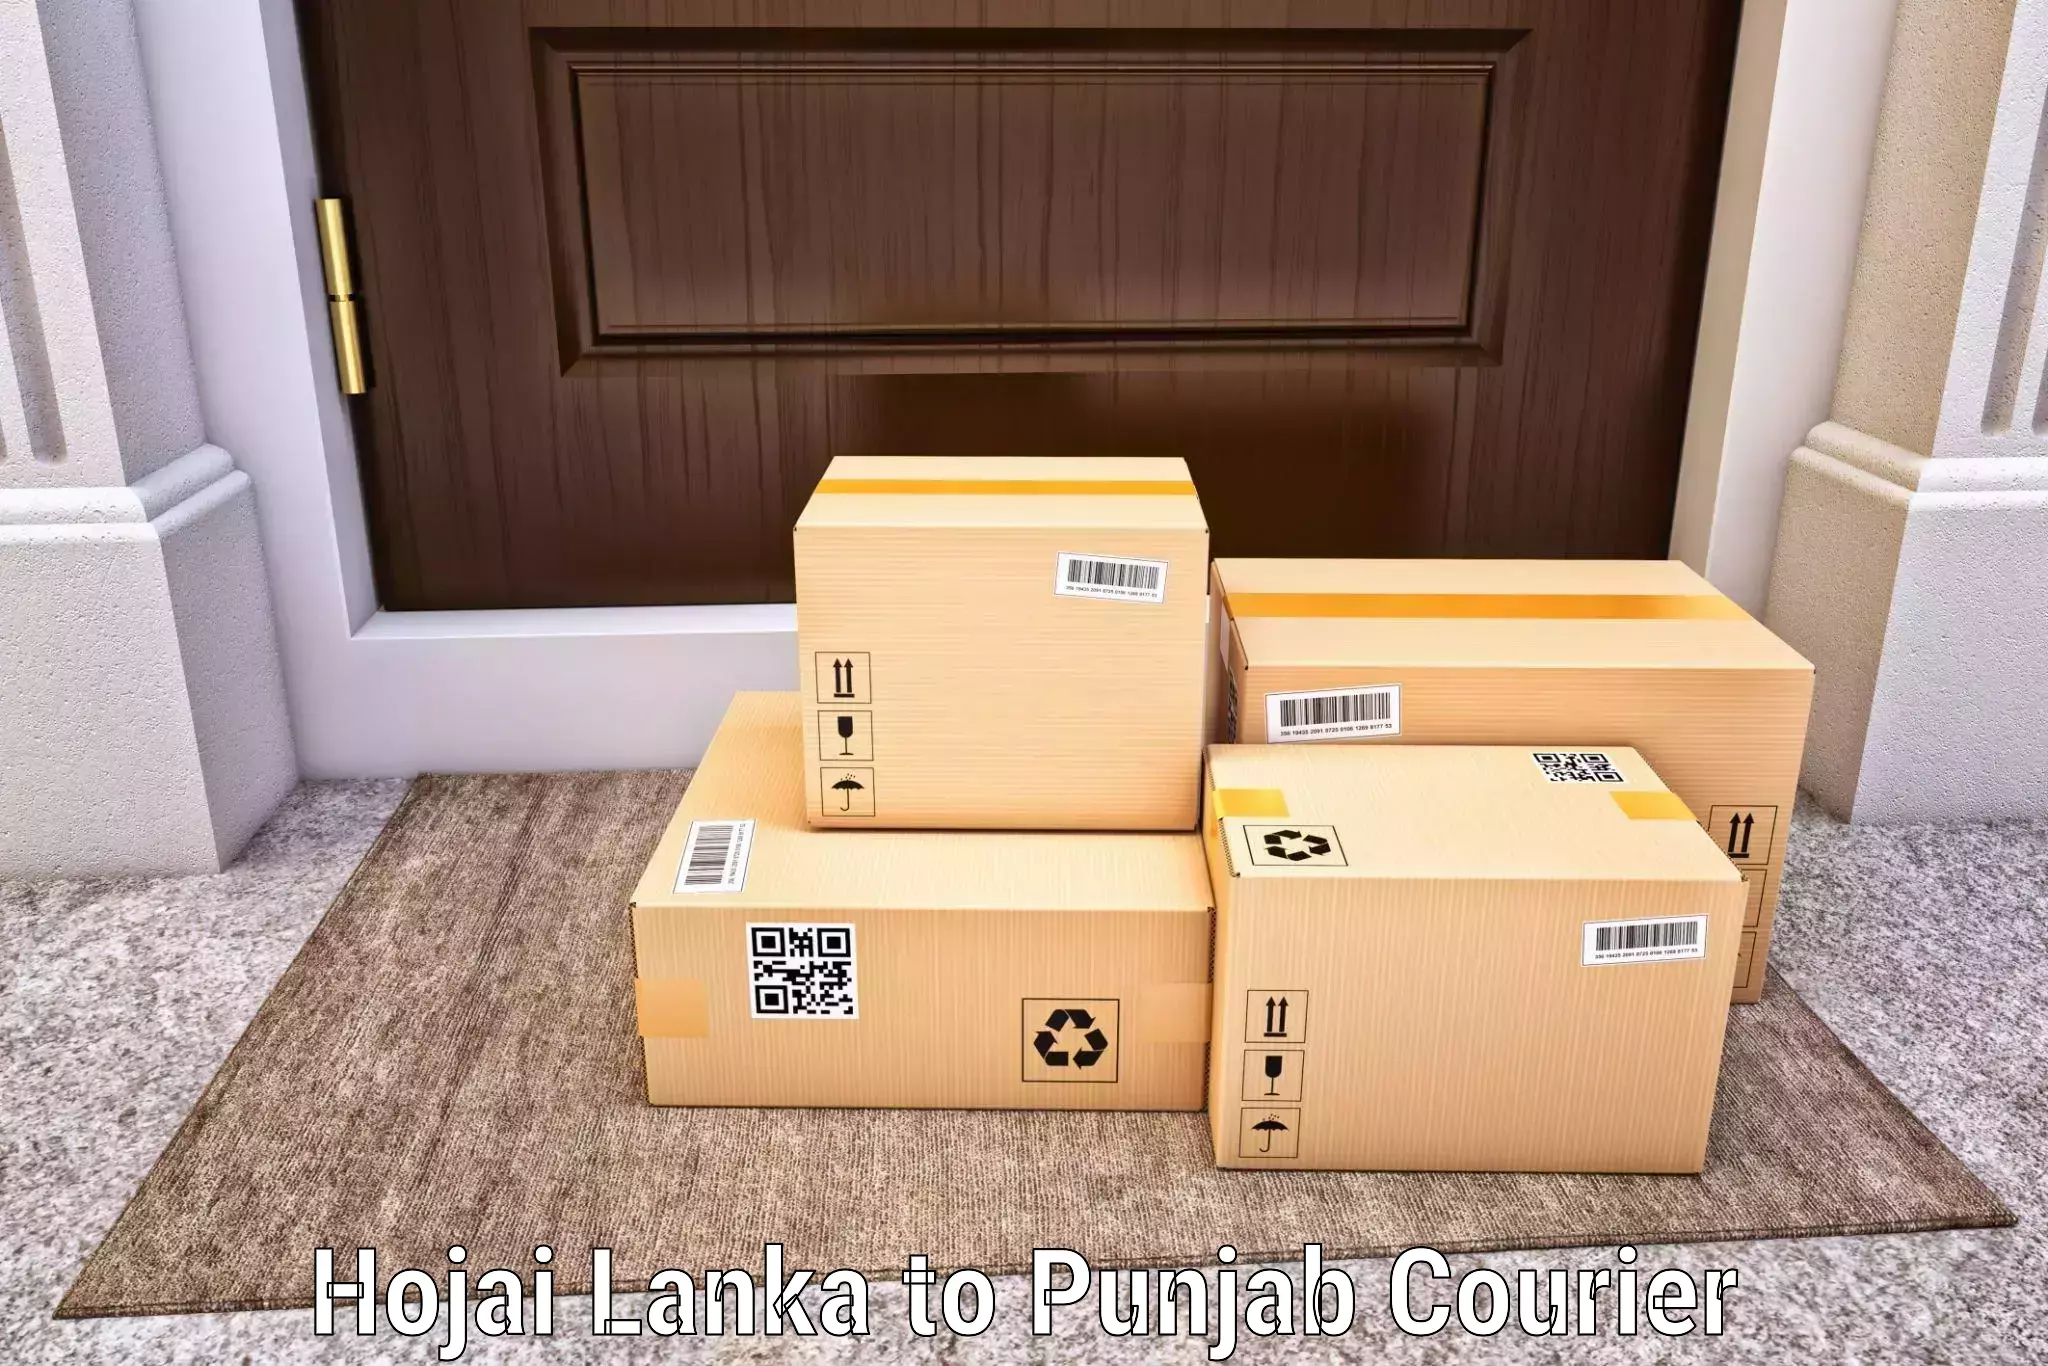 Courier service booking Hojai Lanka to Punjab